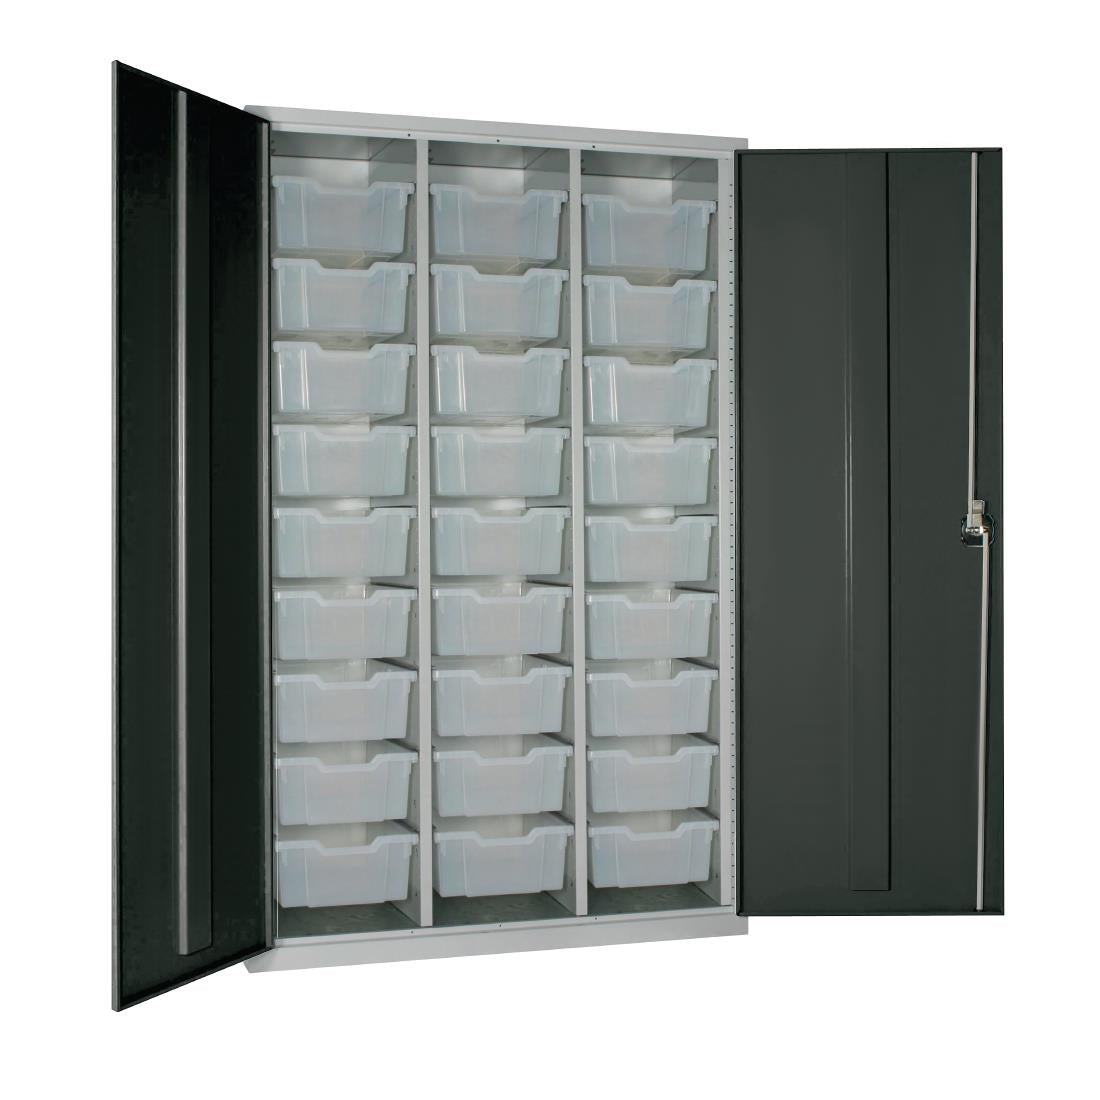 27 Tray High-Capacity Storage Cupboard - Dark Grey with Transparent Trays